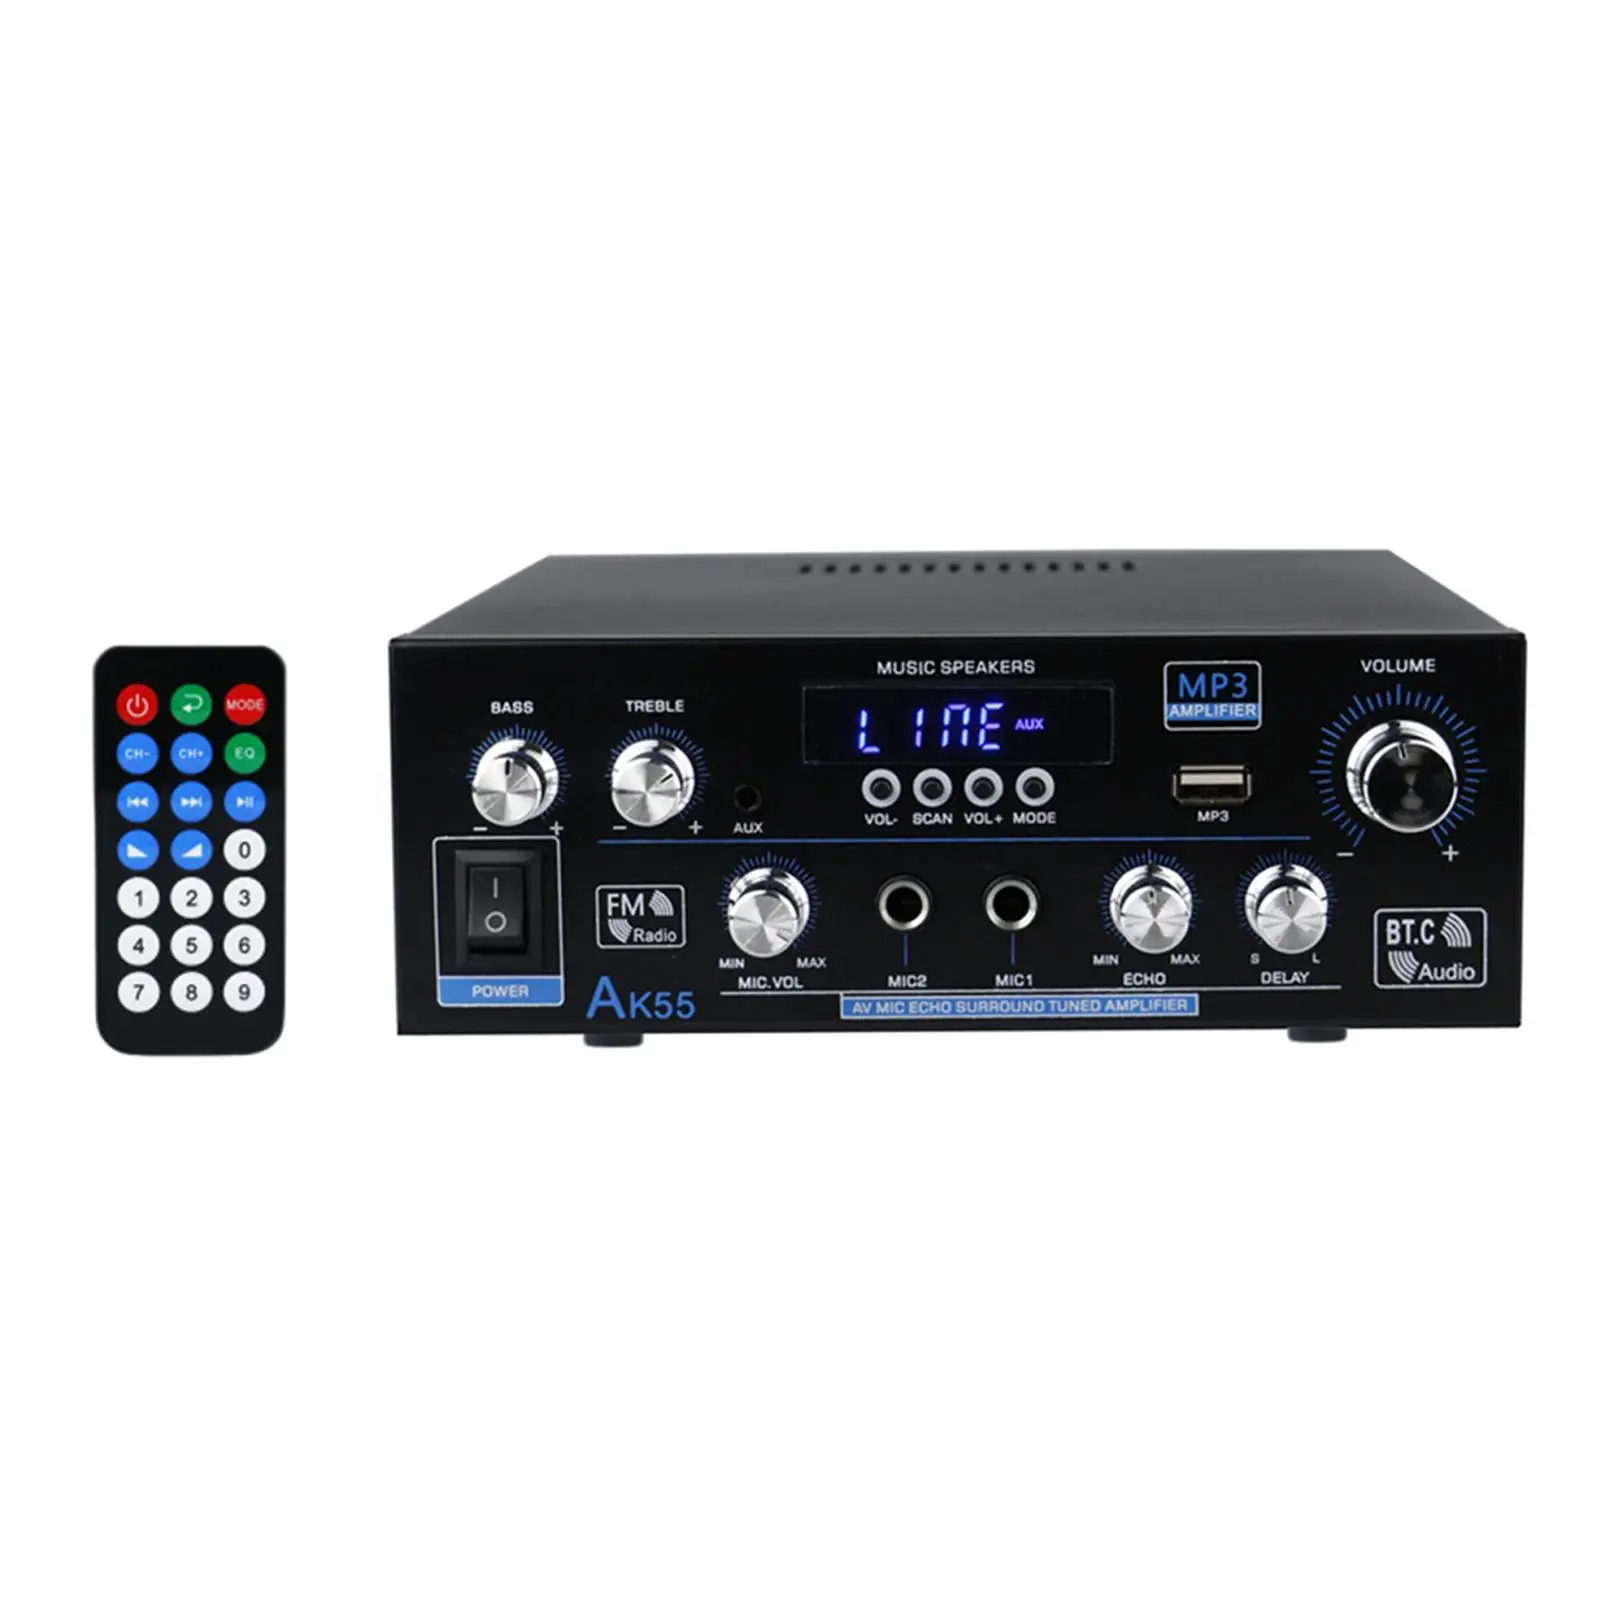 Audio Power Amplifier 70W+70W Dual Channel for Car Home Bar Party 110-240V Portable Sound Amplifier Speaker Amplifier European